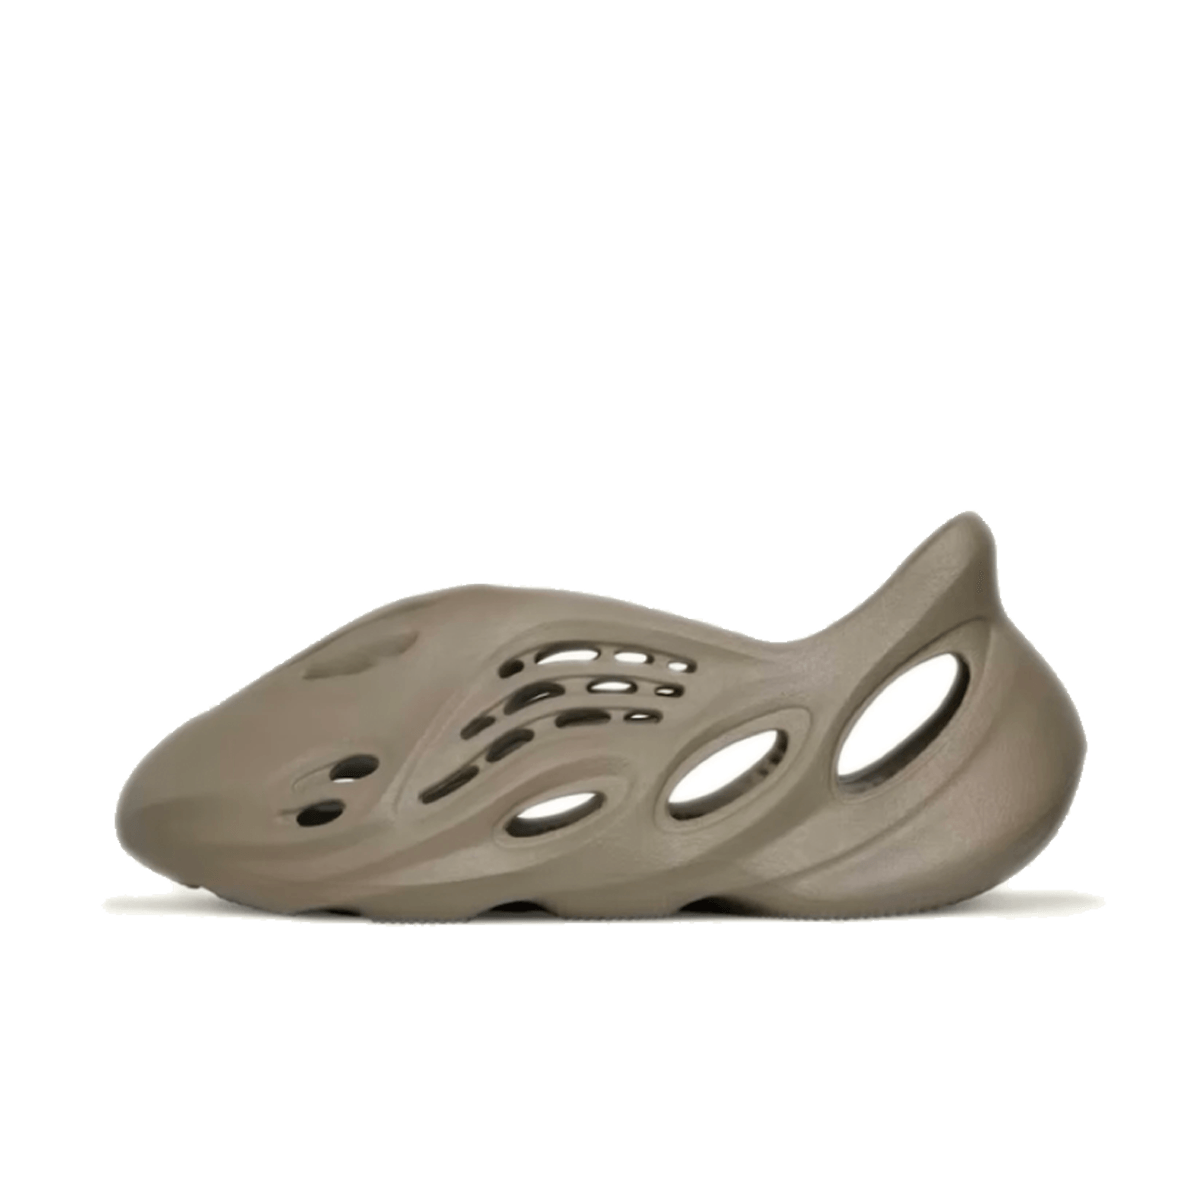 adidas Yeezy Foam Runner 'Stone Taupe' ID4752